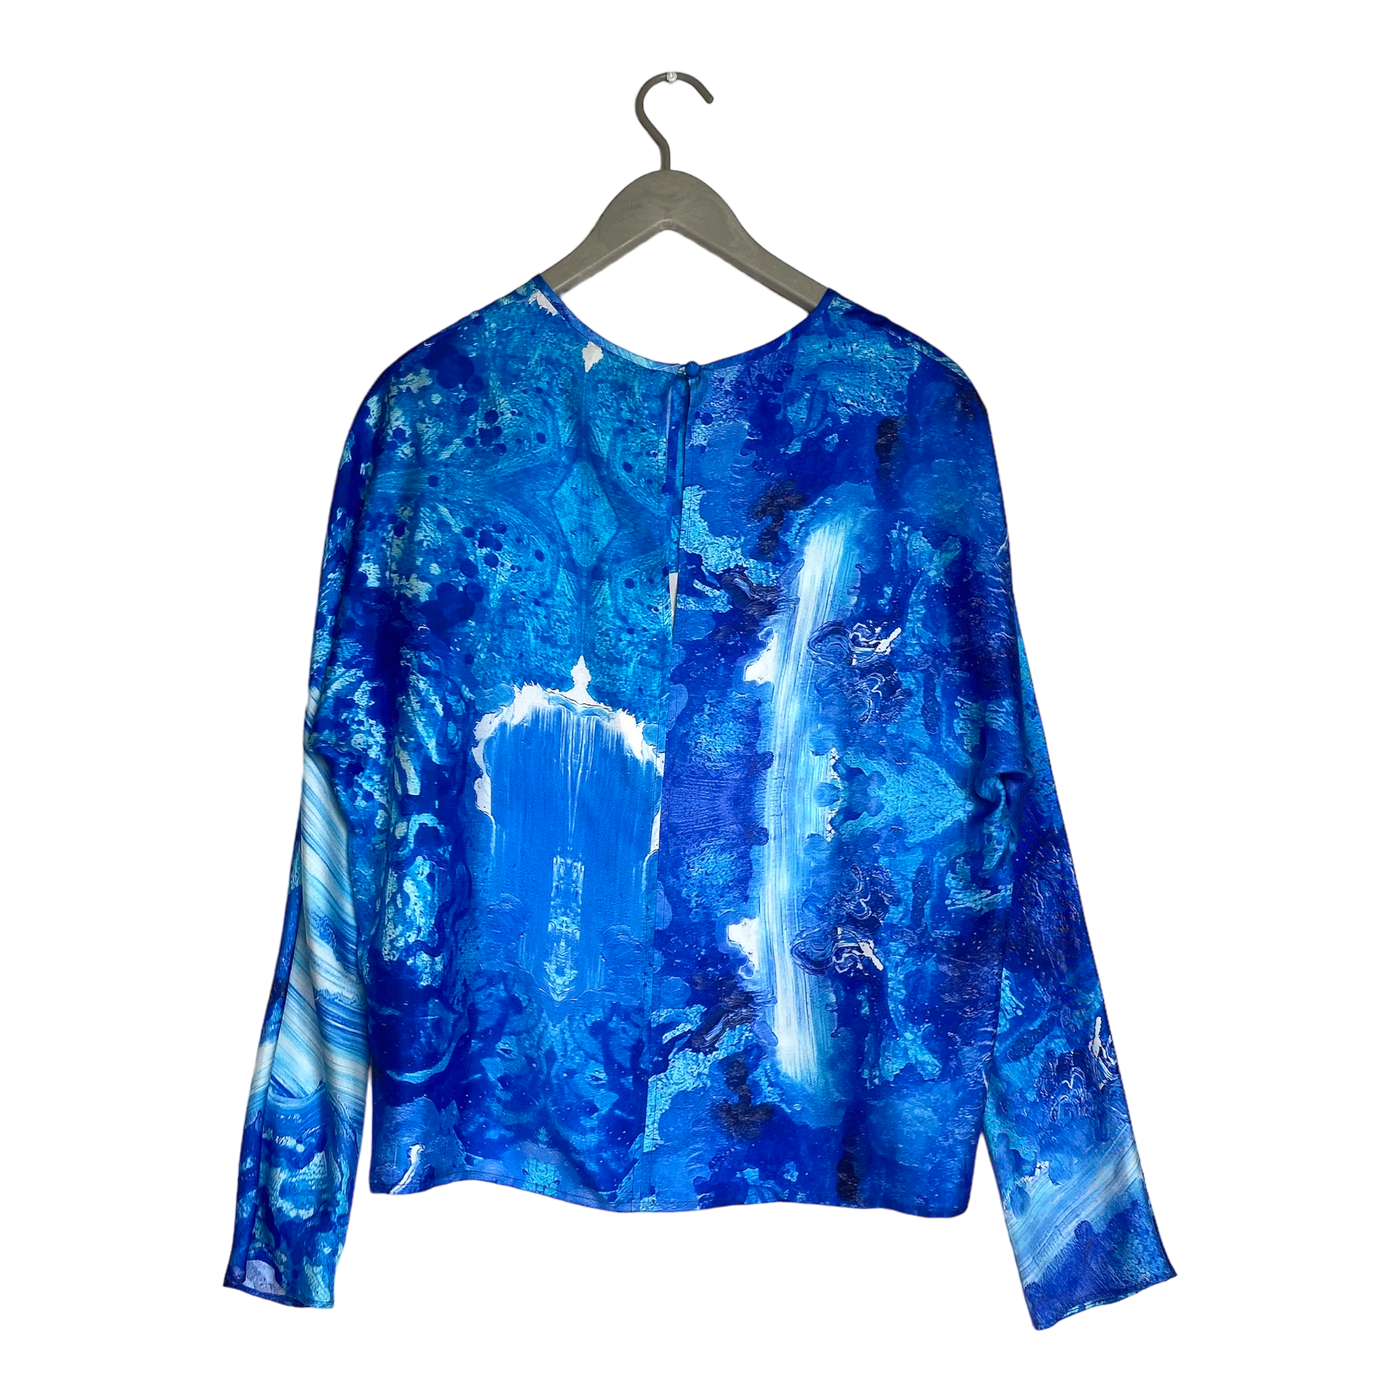 Studio Heijne revolution silk shirt, blue vault | woman M